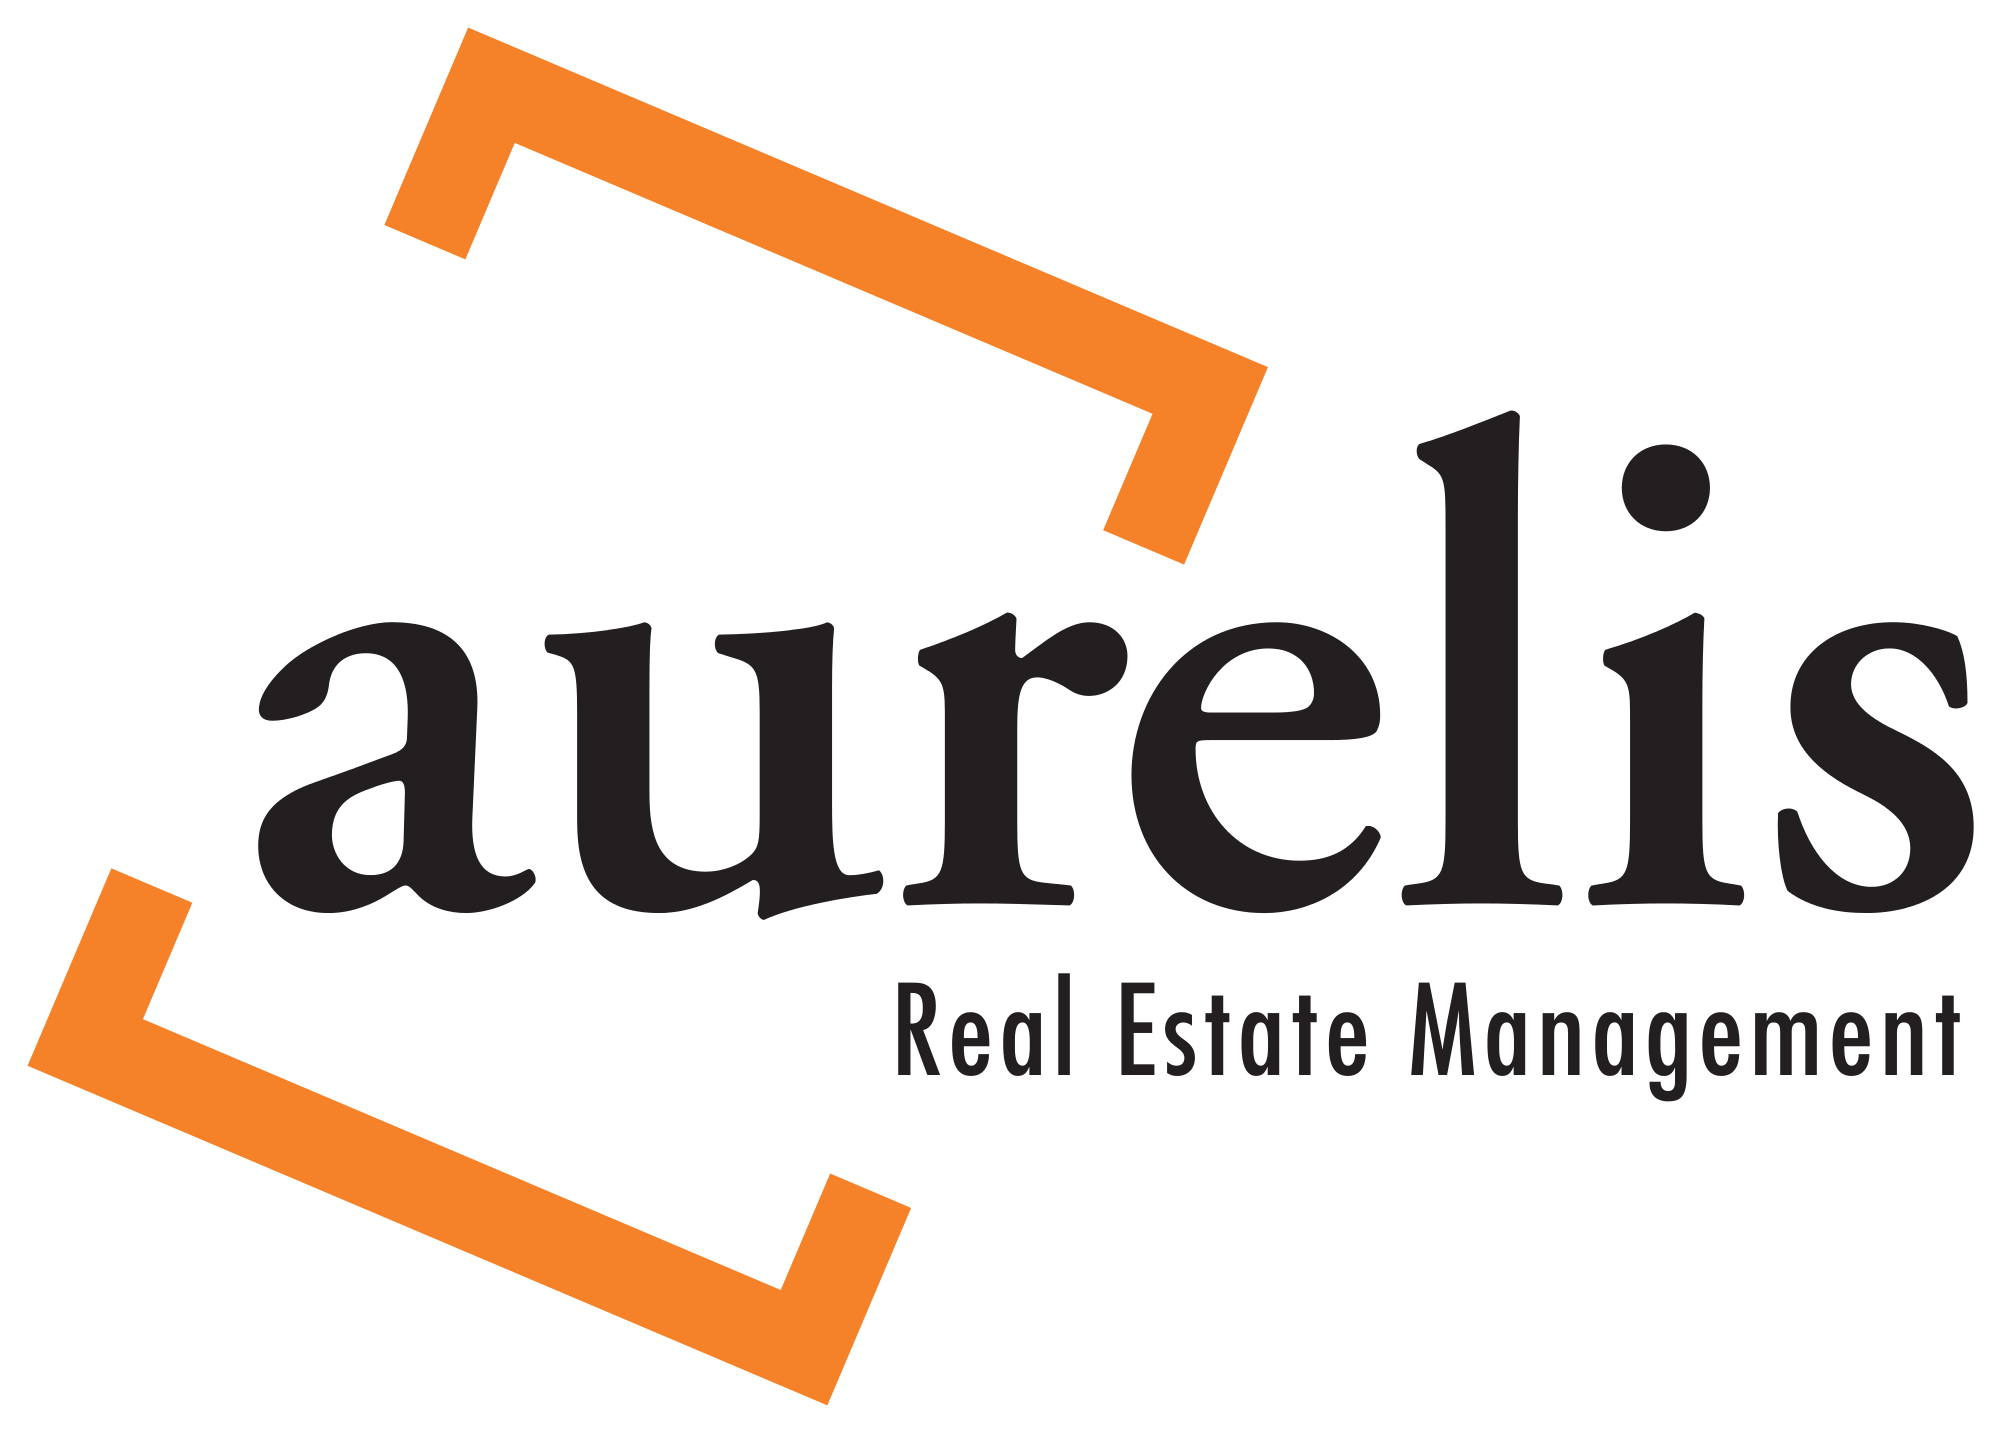 Aurelis Real Estate Management